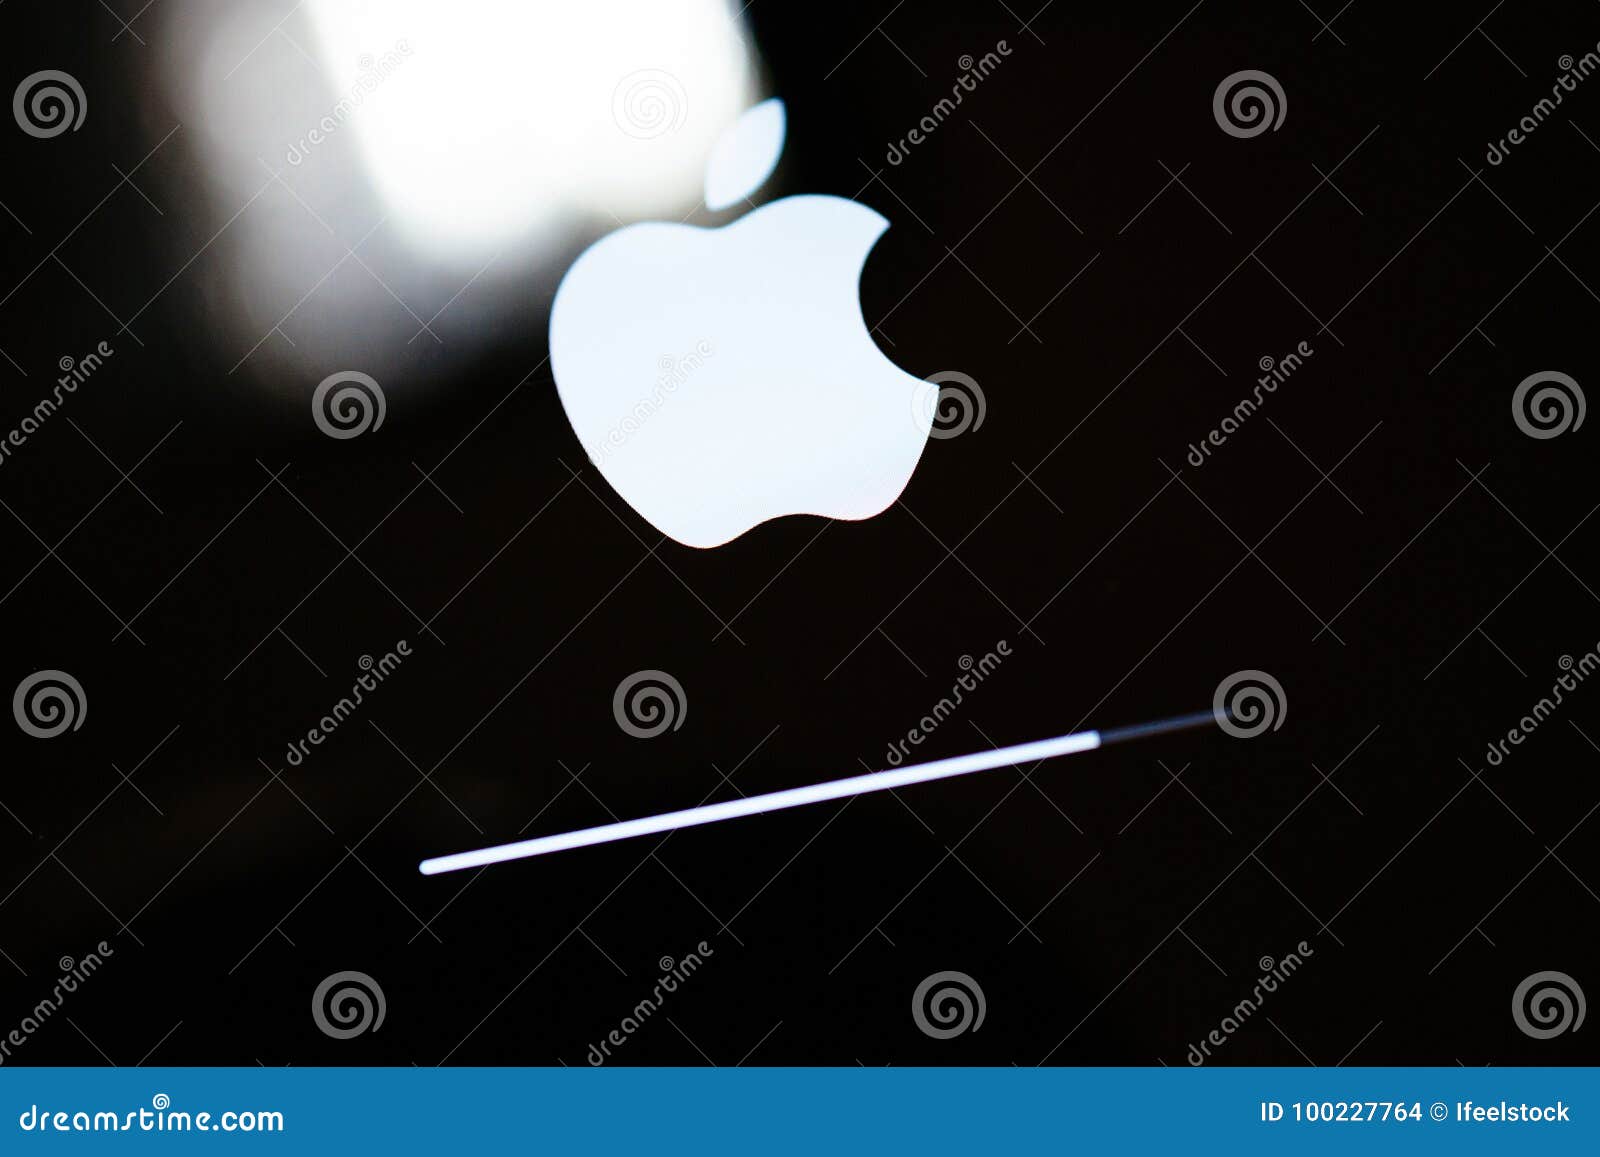 Apple Computers Logotype Logo Loading Bar Editorial Stock Image - Image ...